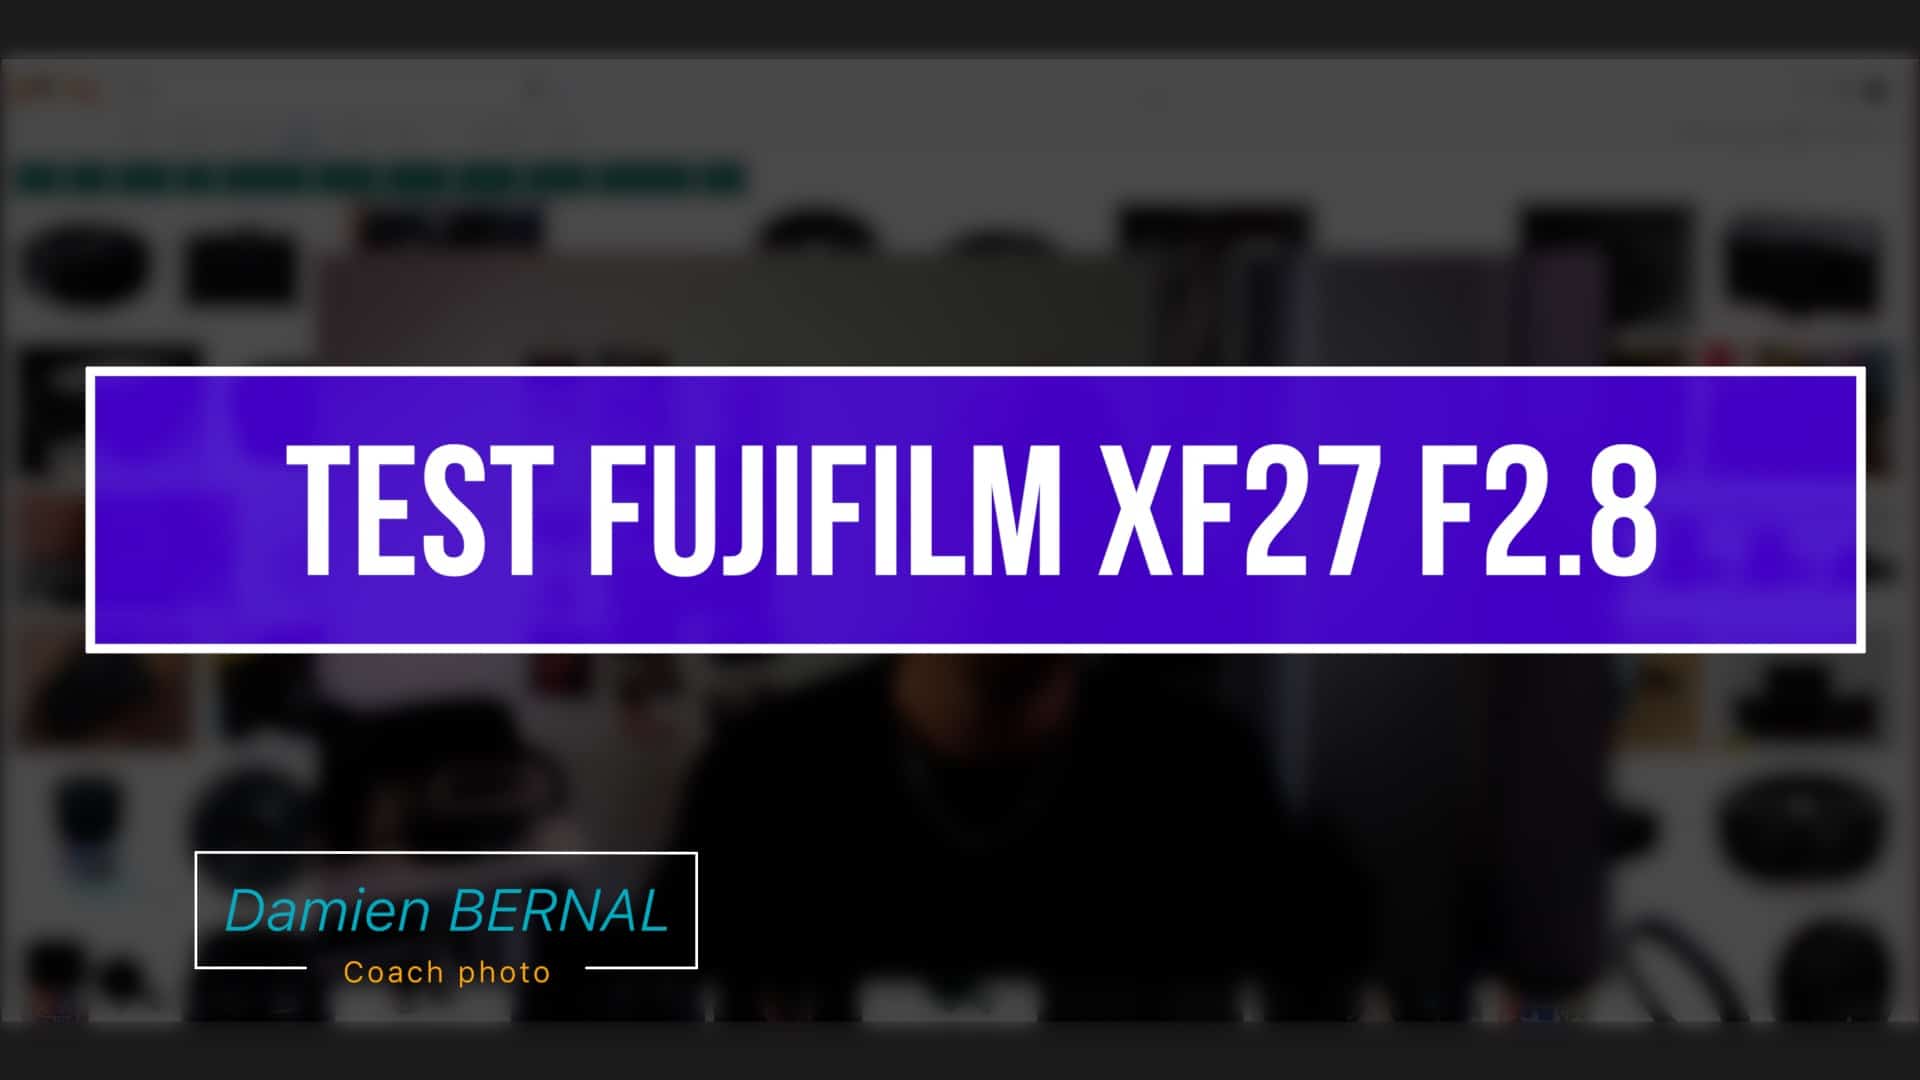 Test Fujifilm XF 27 F2.8